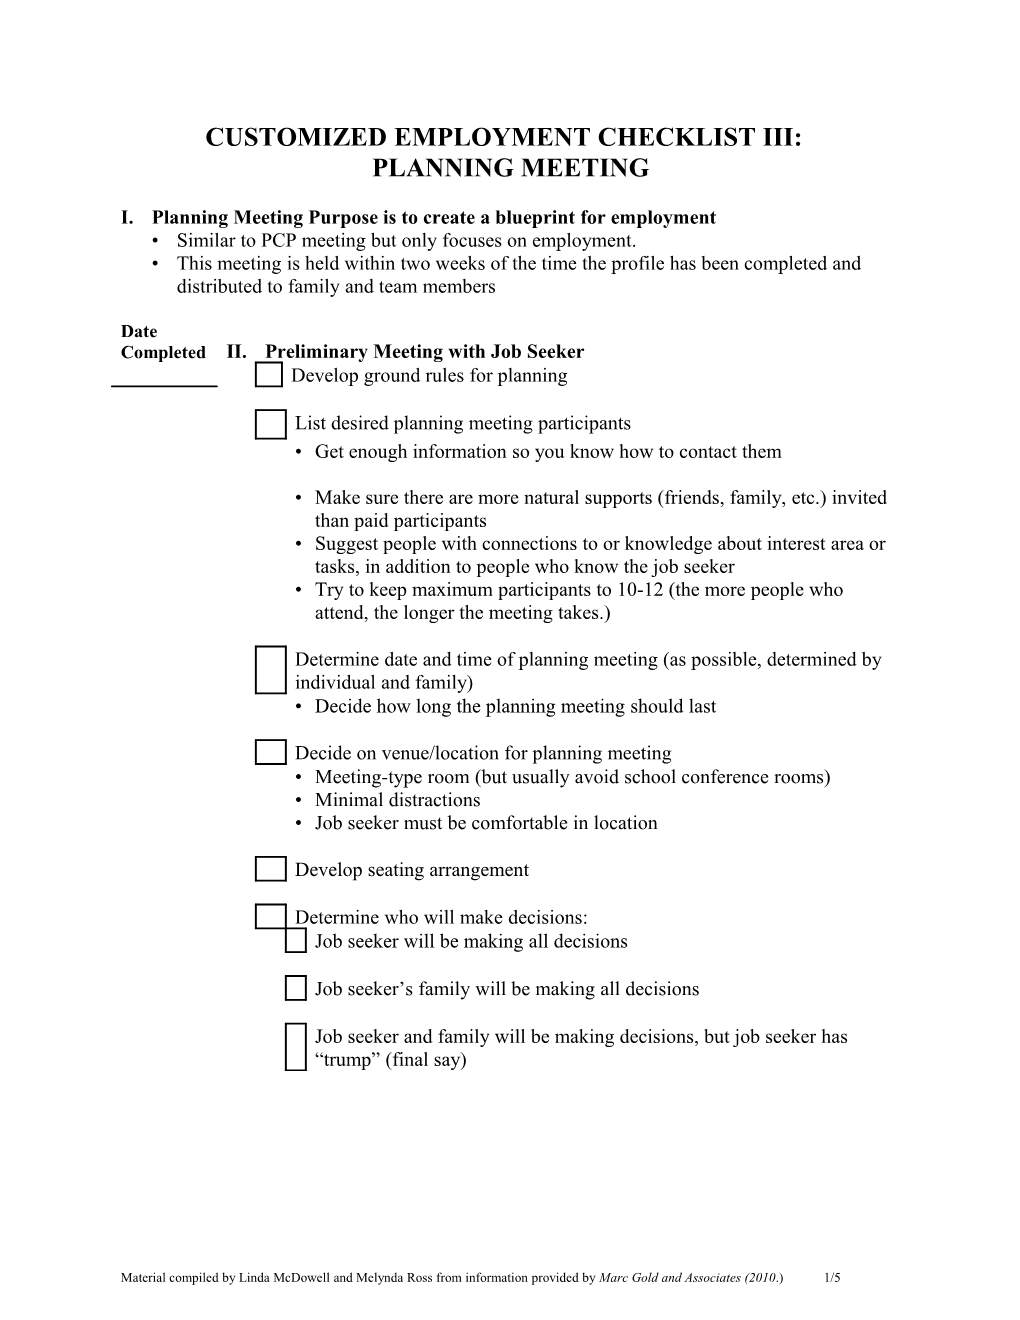 Customized Employment Checklist III: Planning Meeting